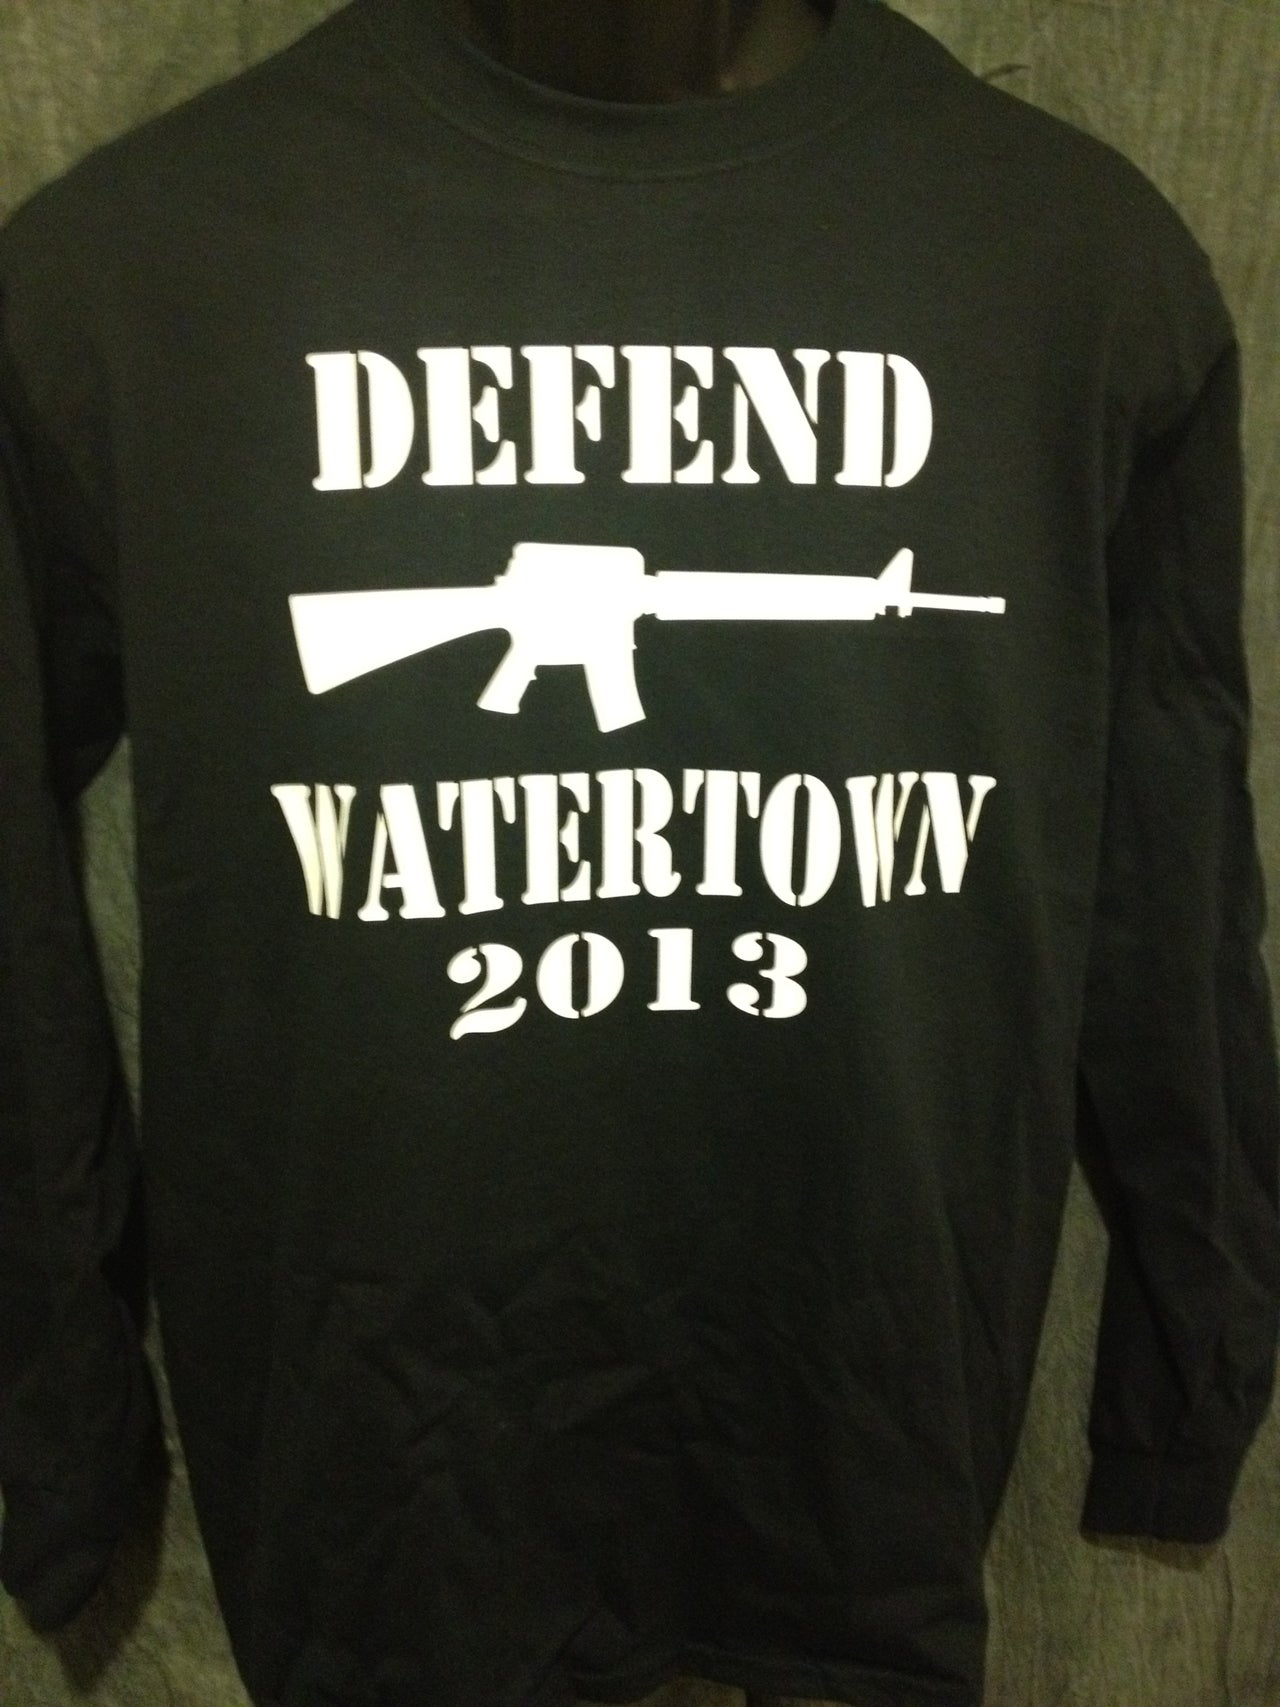 Defend Watertown 2013 Longsleeve Tshirt: Black With White Print - TshirtNow.net - 1